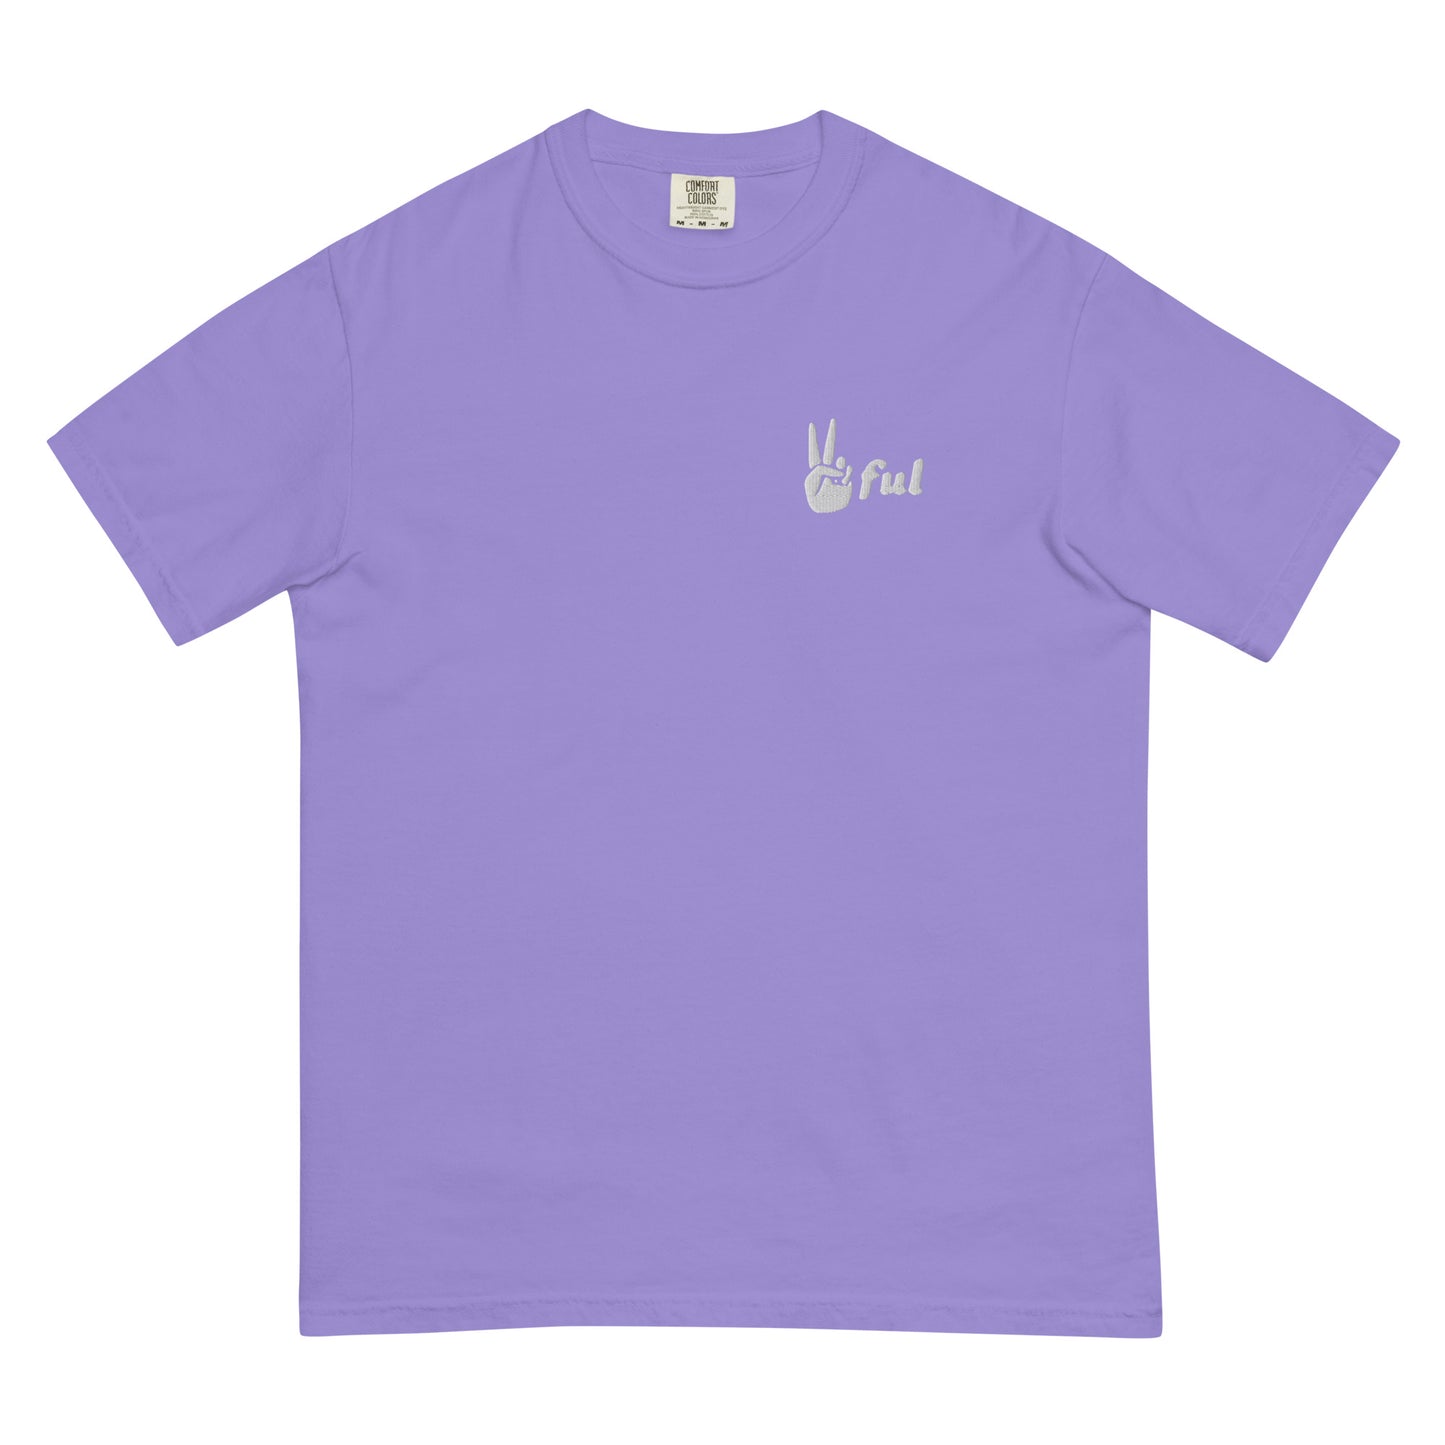 Unisex Peaceful garment-dyed heavyweight t-shirt